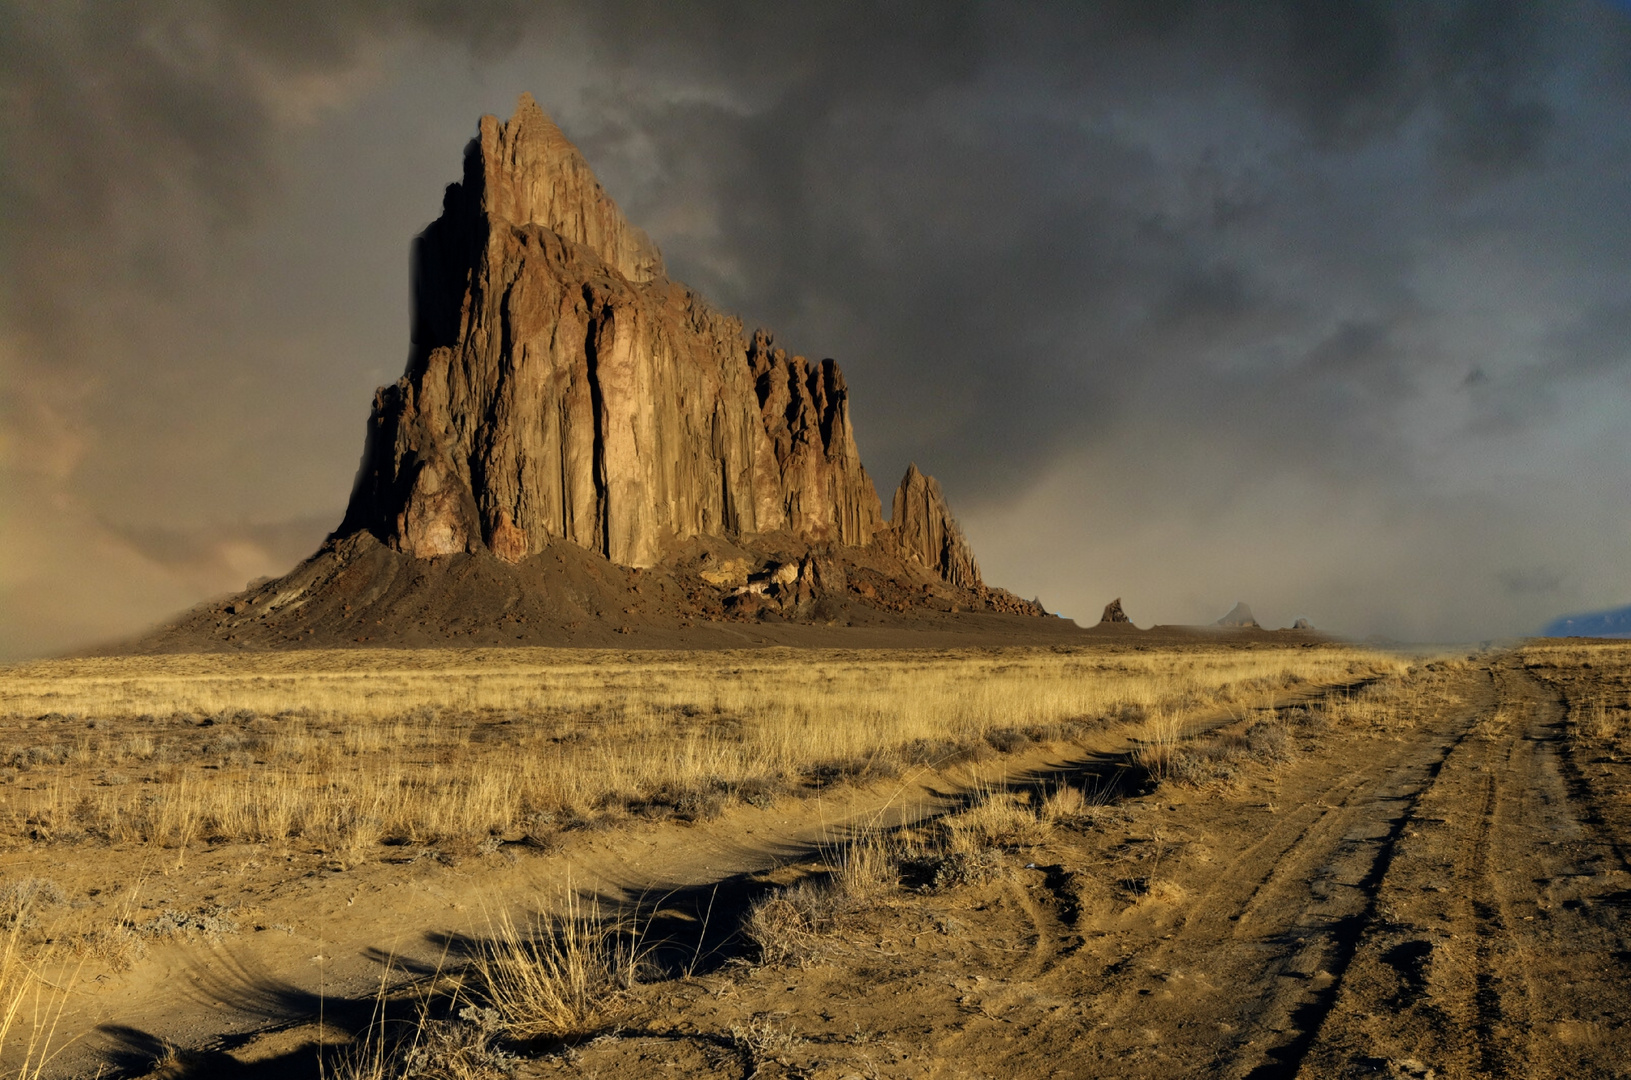 Shiprock - the sacred shrine of Navajo people - New Mexico